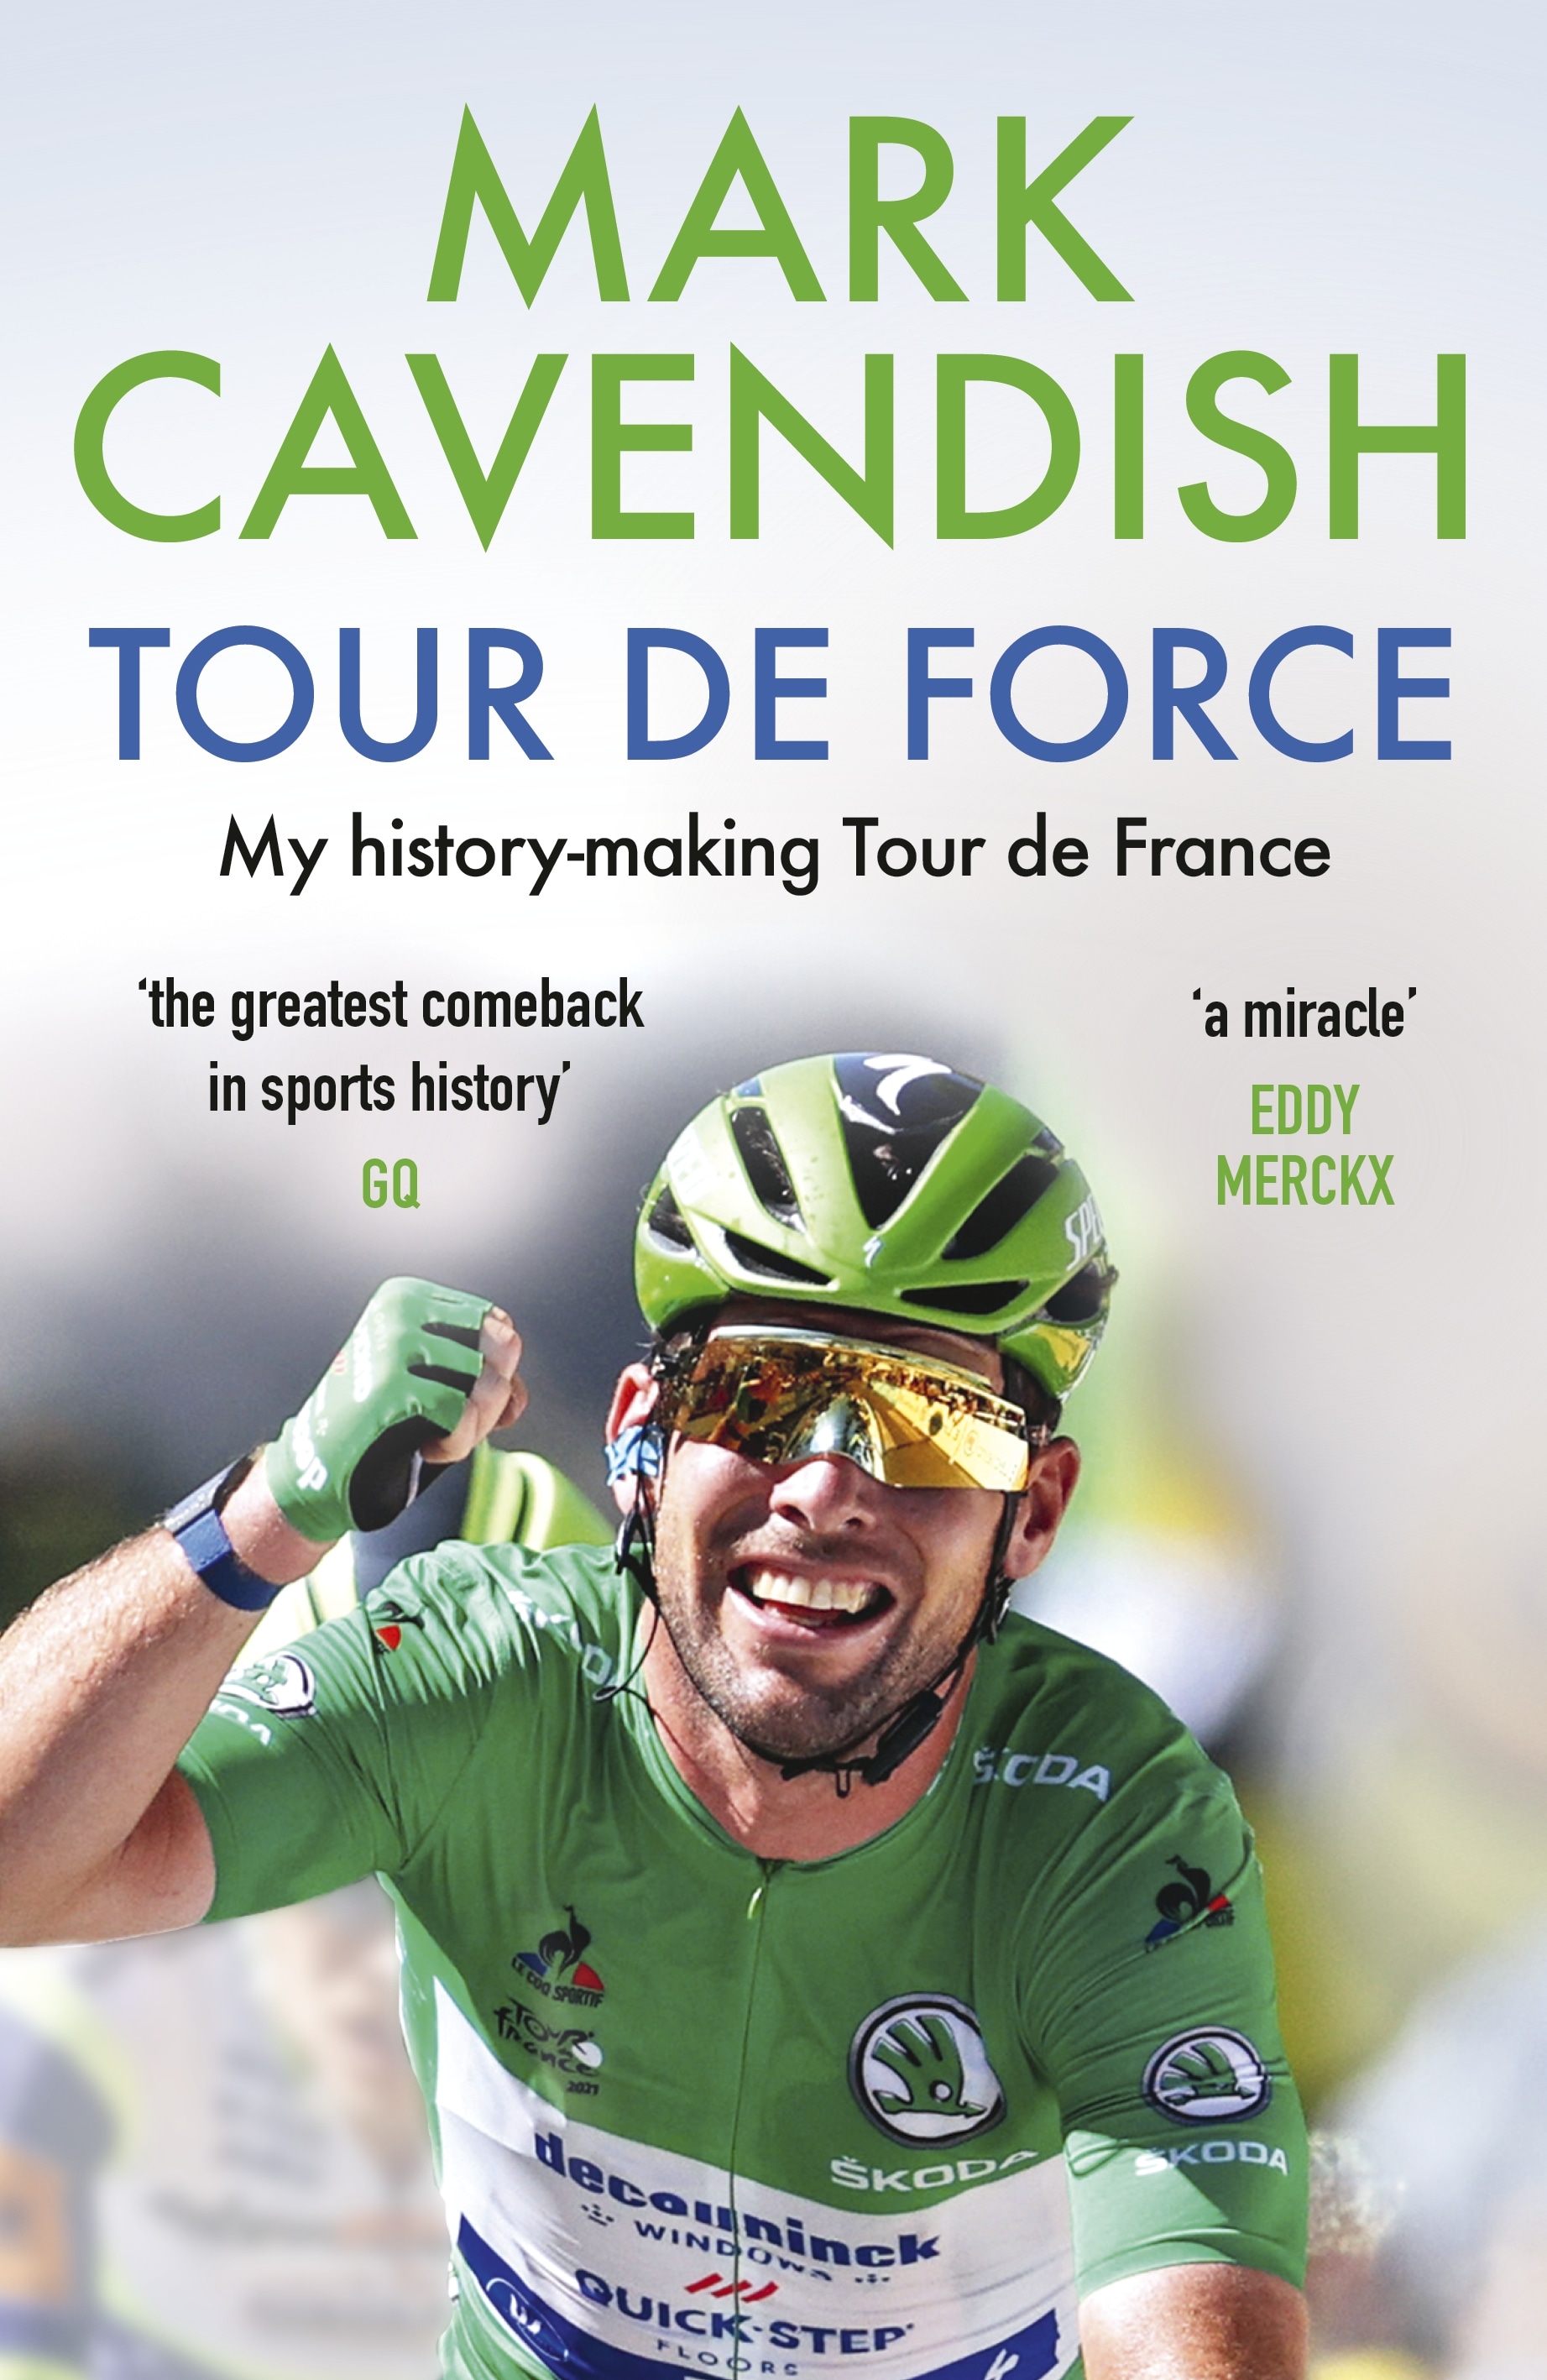 Book “Tour de Force” by Mark Cavendish — November 25, 2021